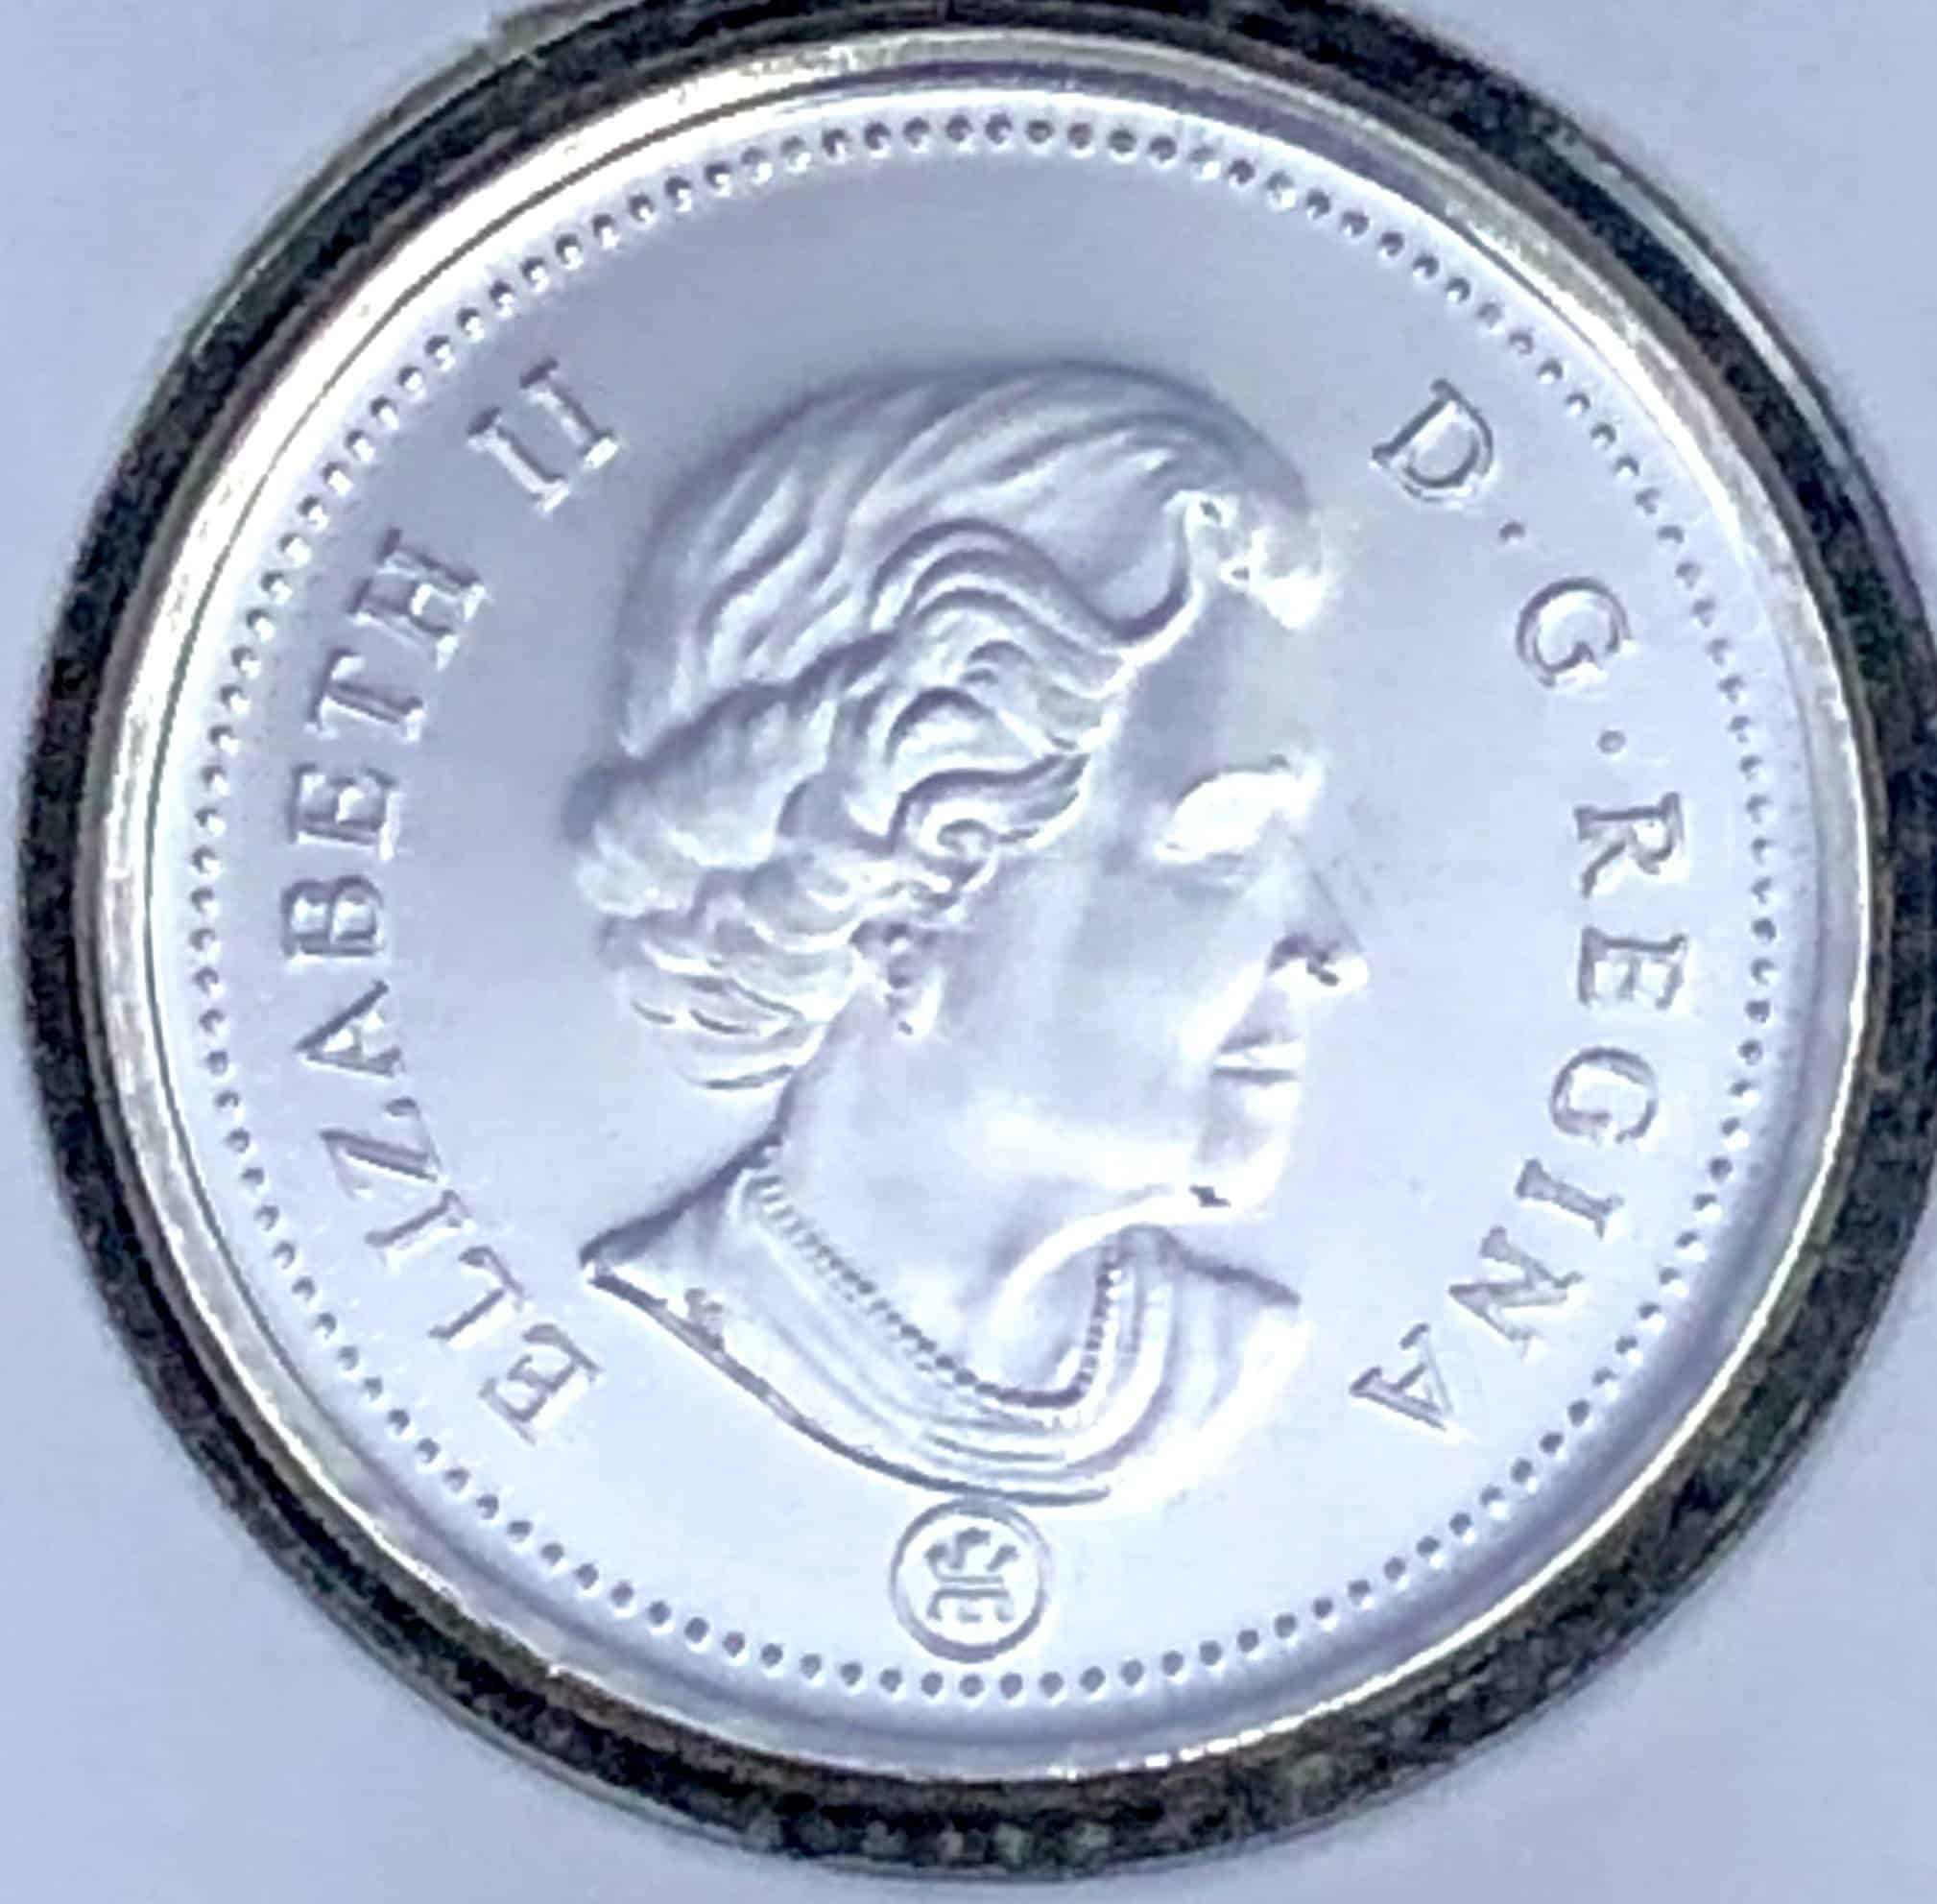 Canada - 10 cents 2012 - B.UNC